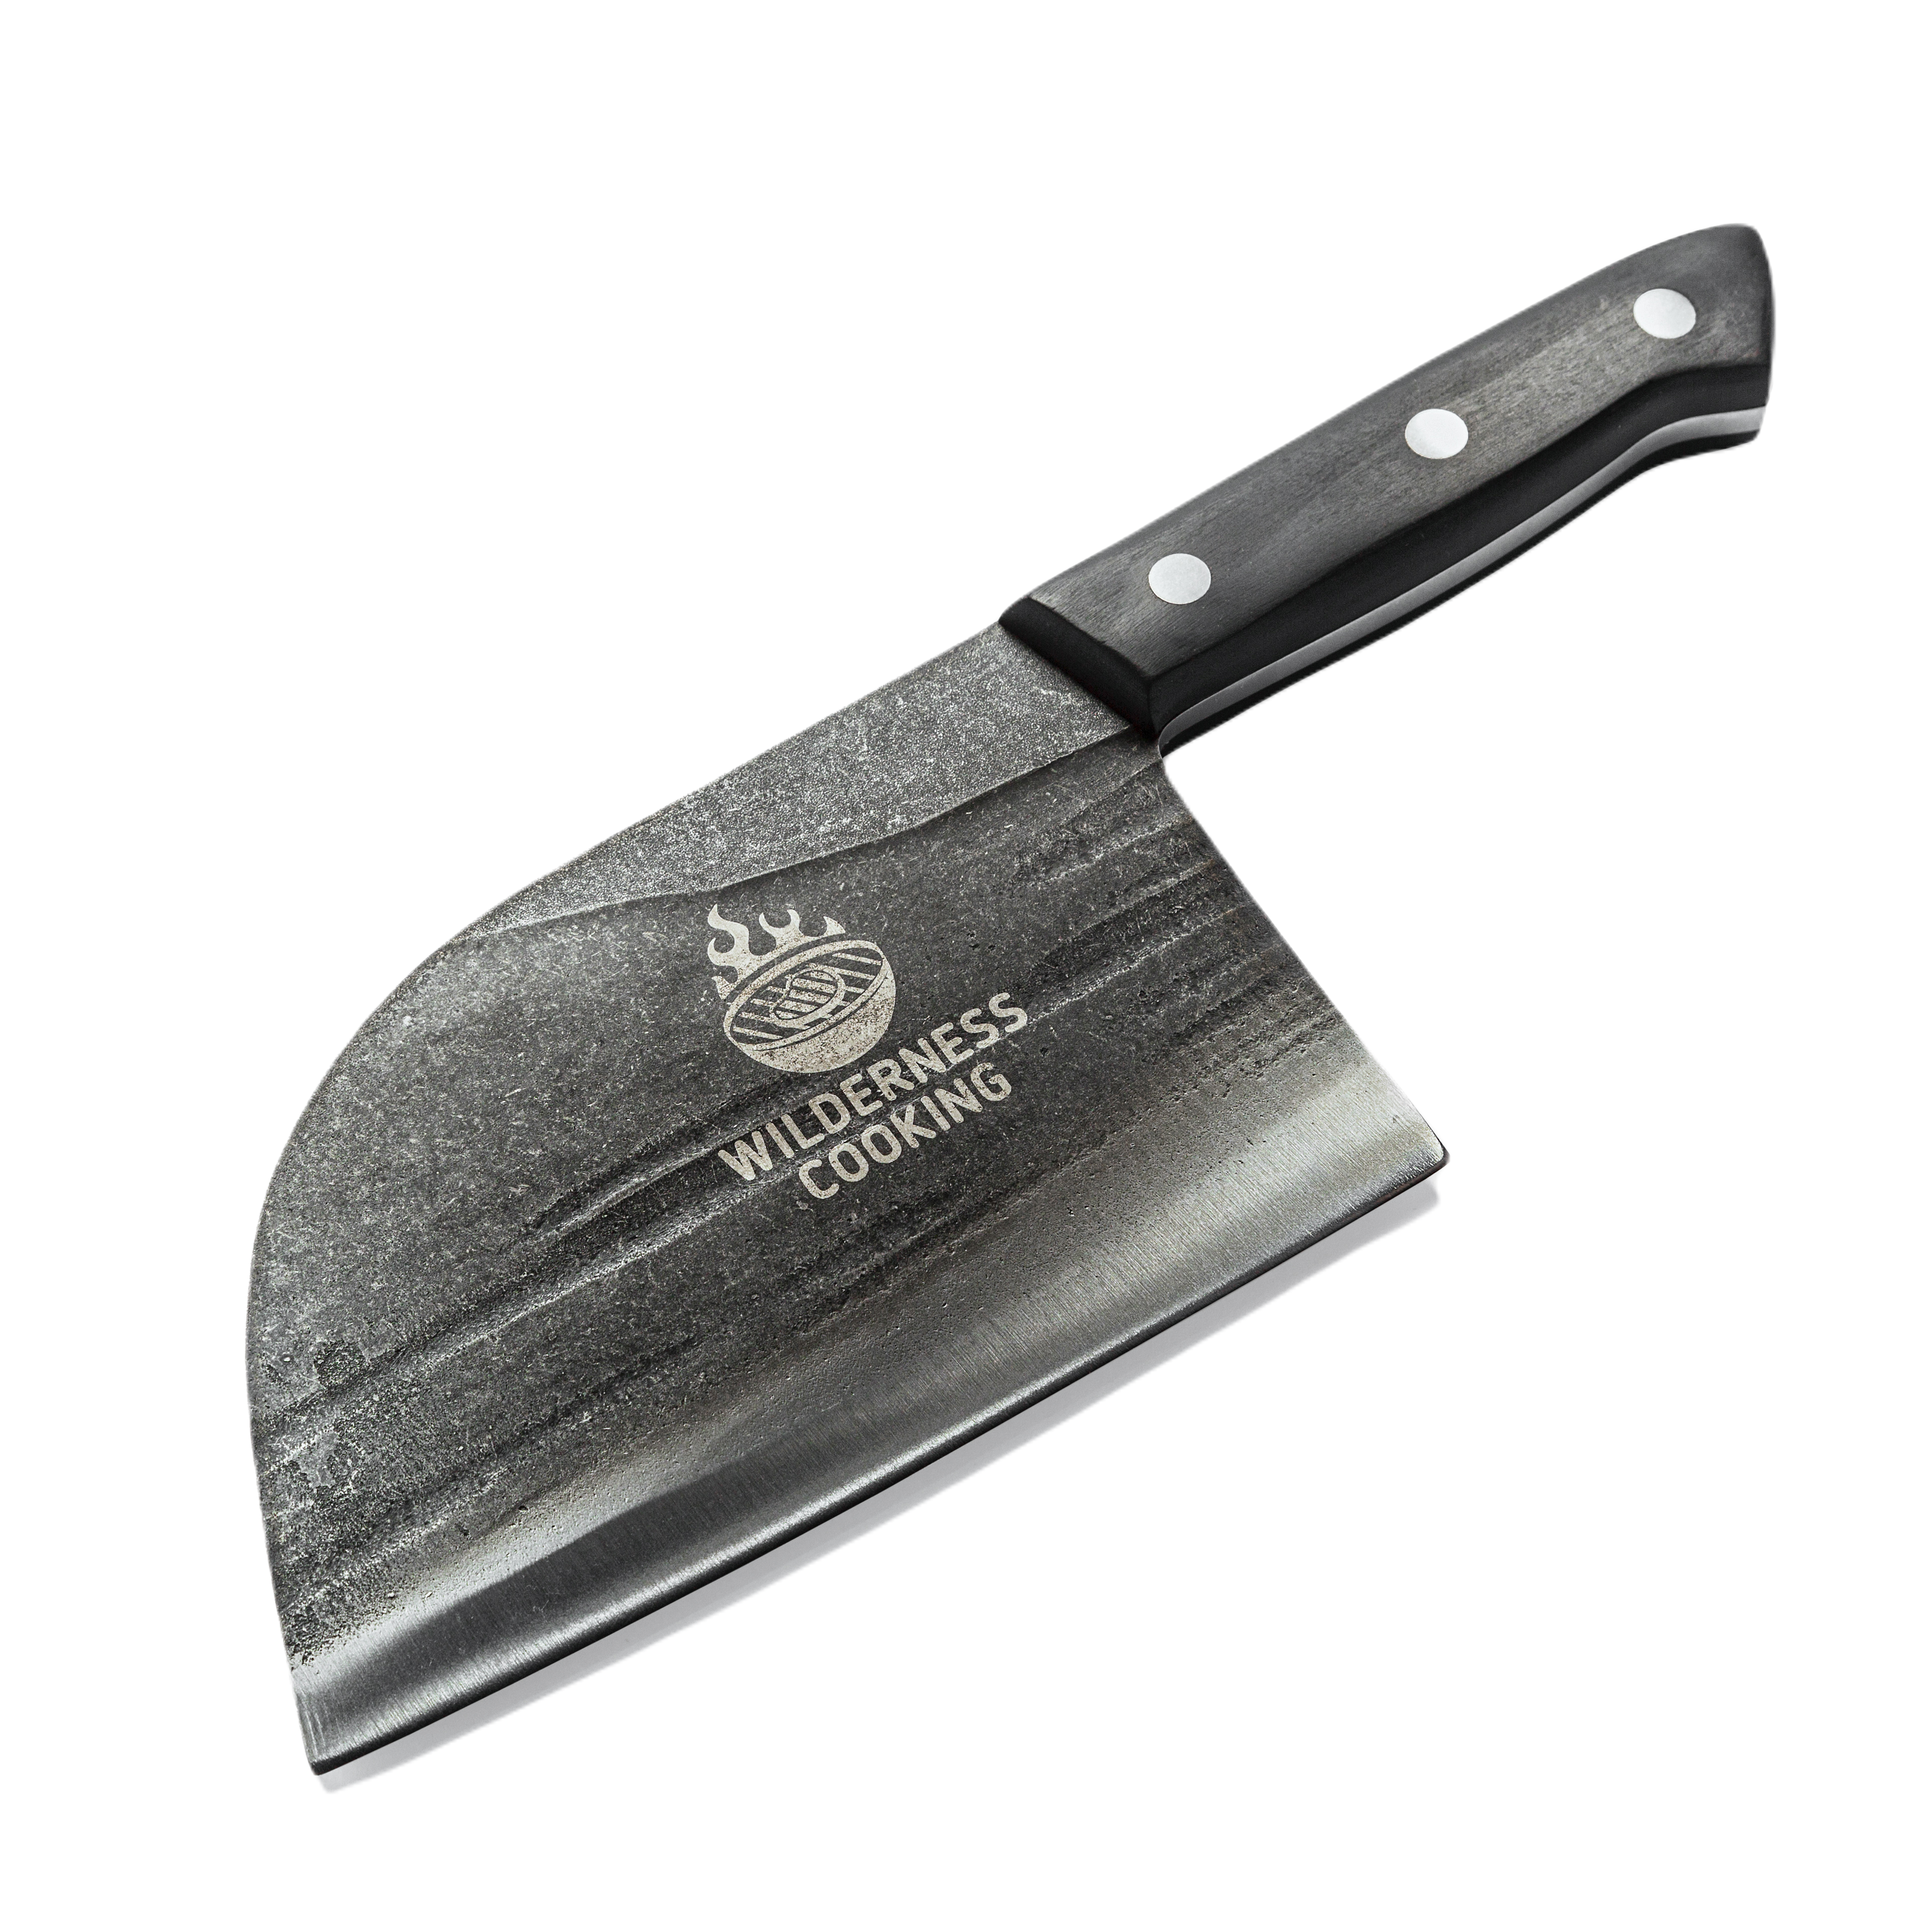 Cleaver-Messer im alten Stil mit Gürtels chleife Öko-Ledersc heide